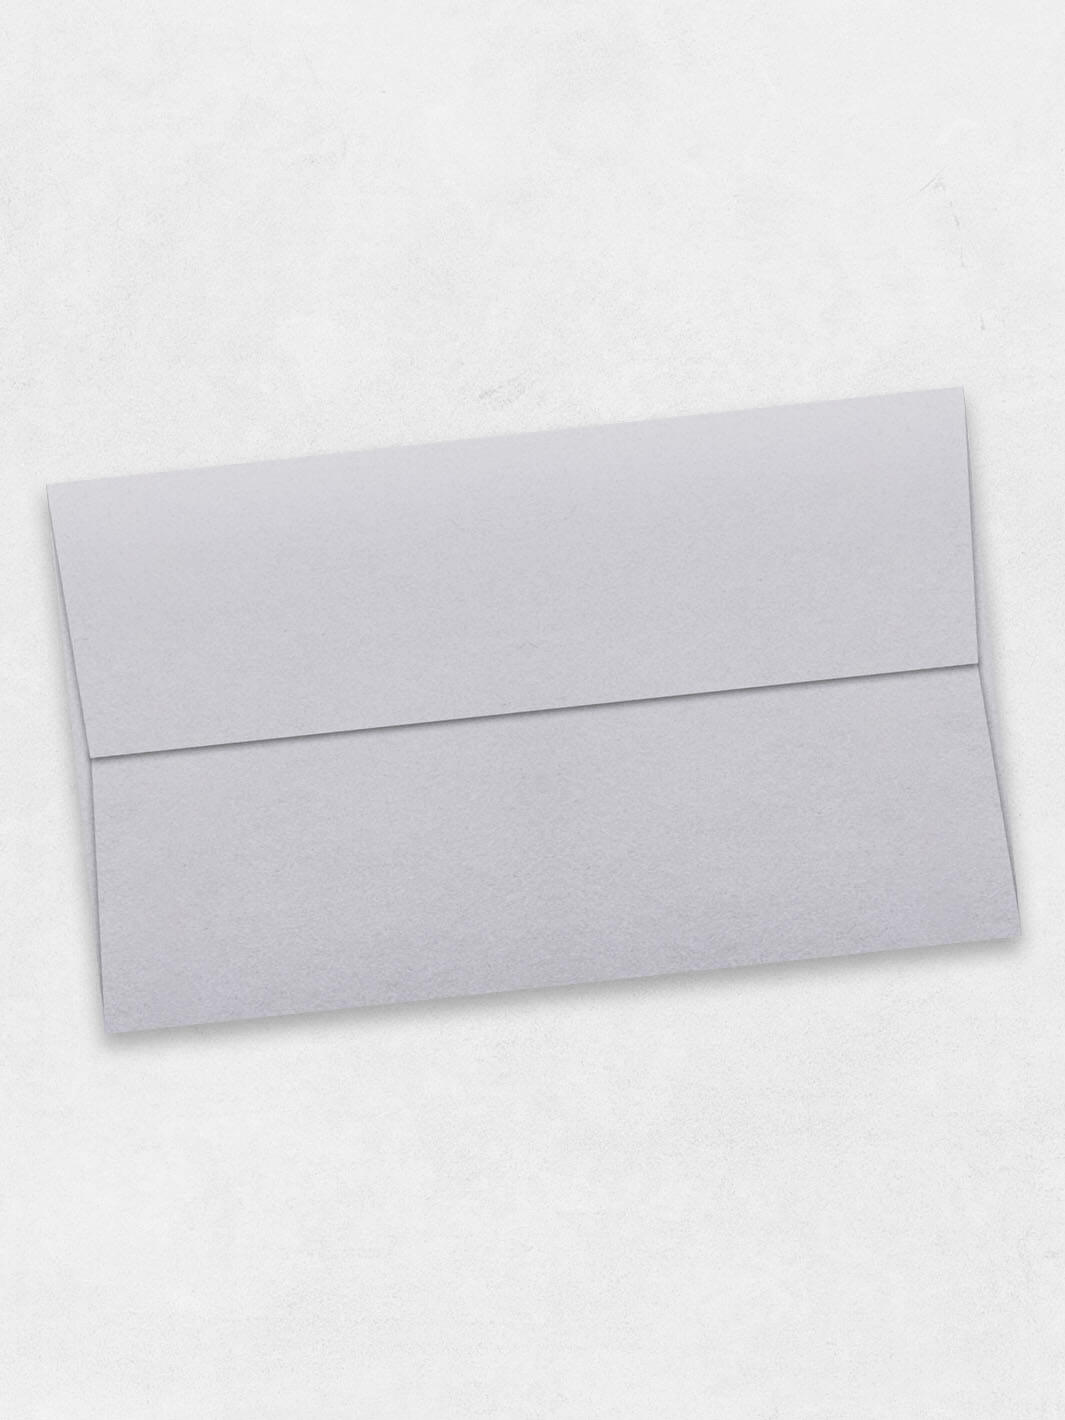 silver metallic colored a1 envelope